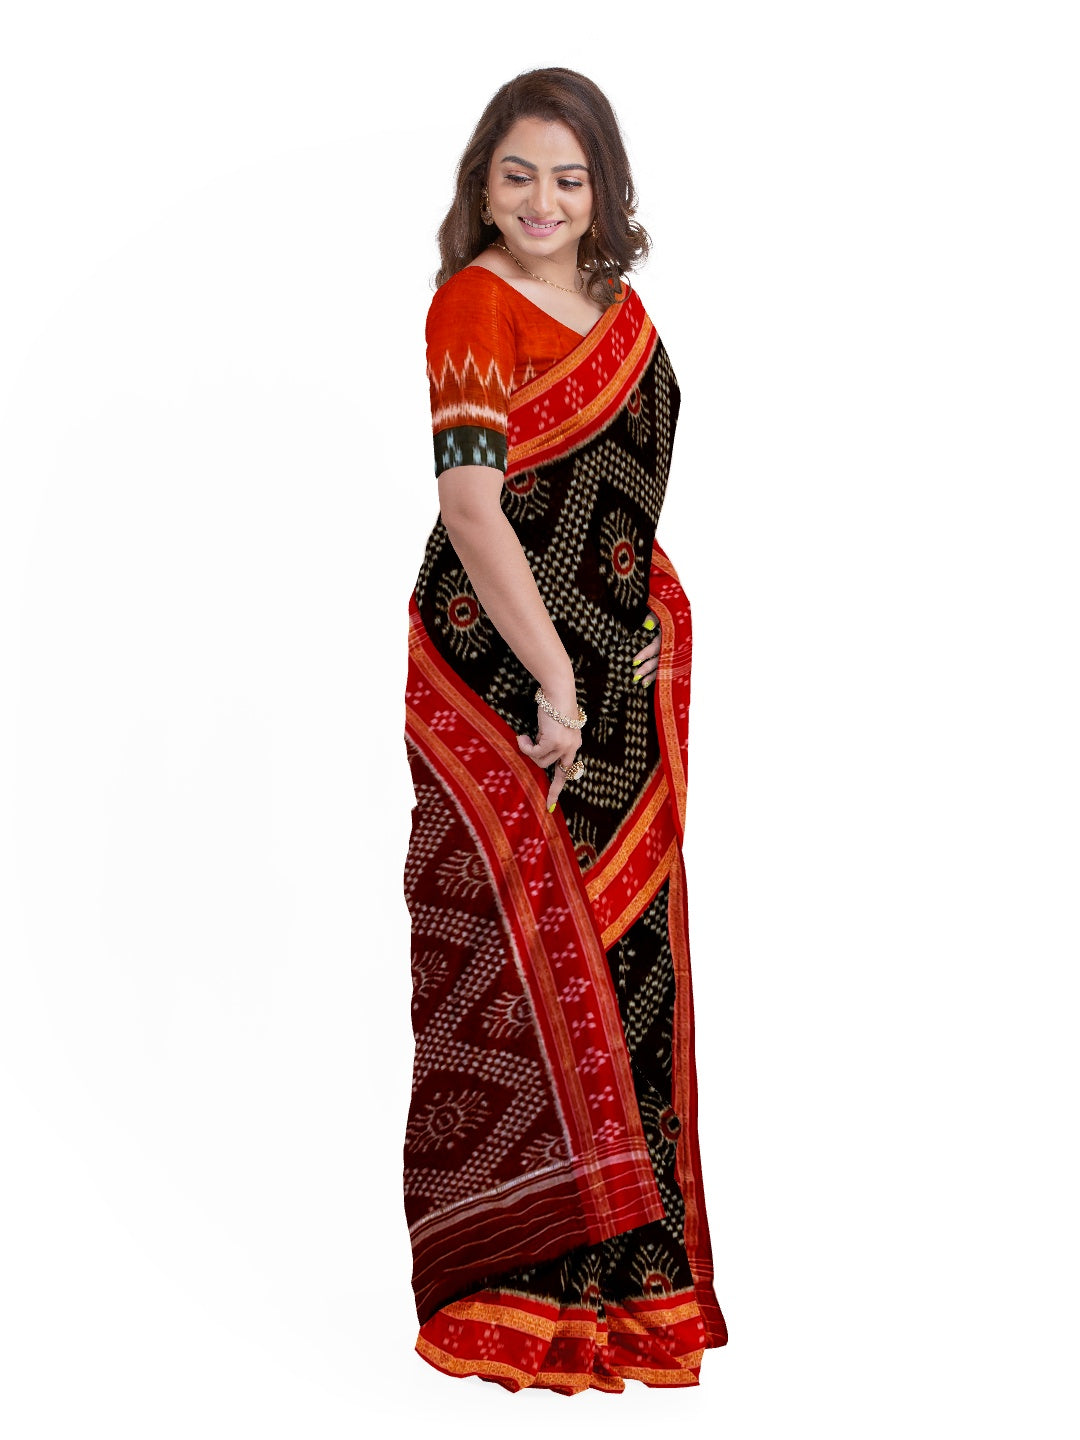 Black and red cotton Odisha ikat saree with Tarabali pattern and matching blouse piece